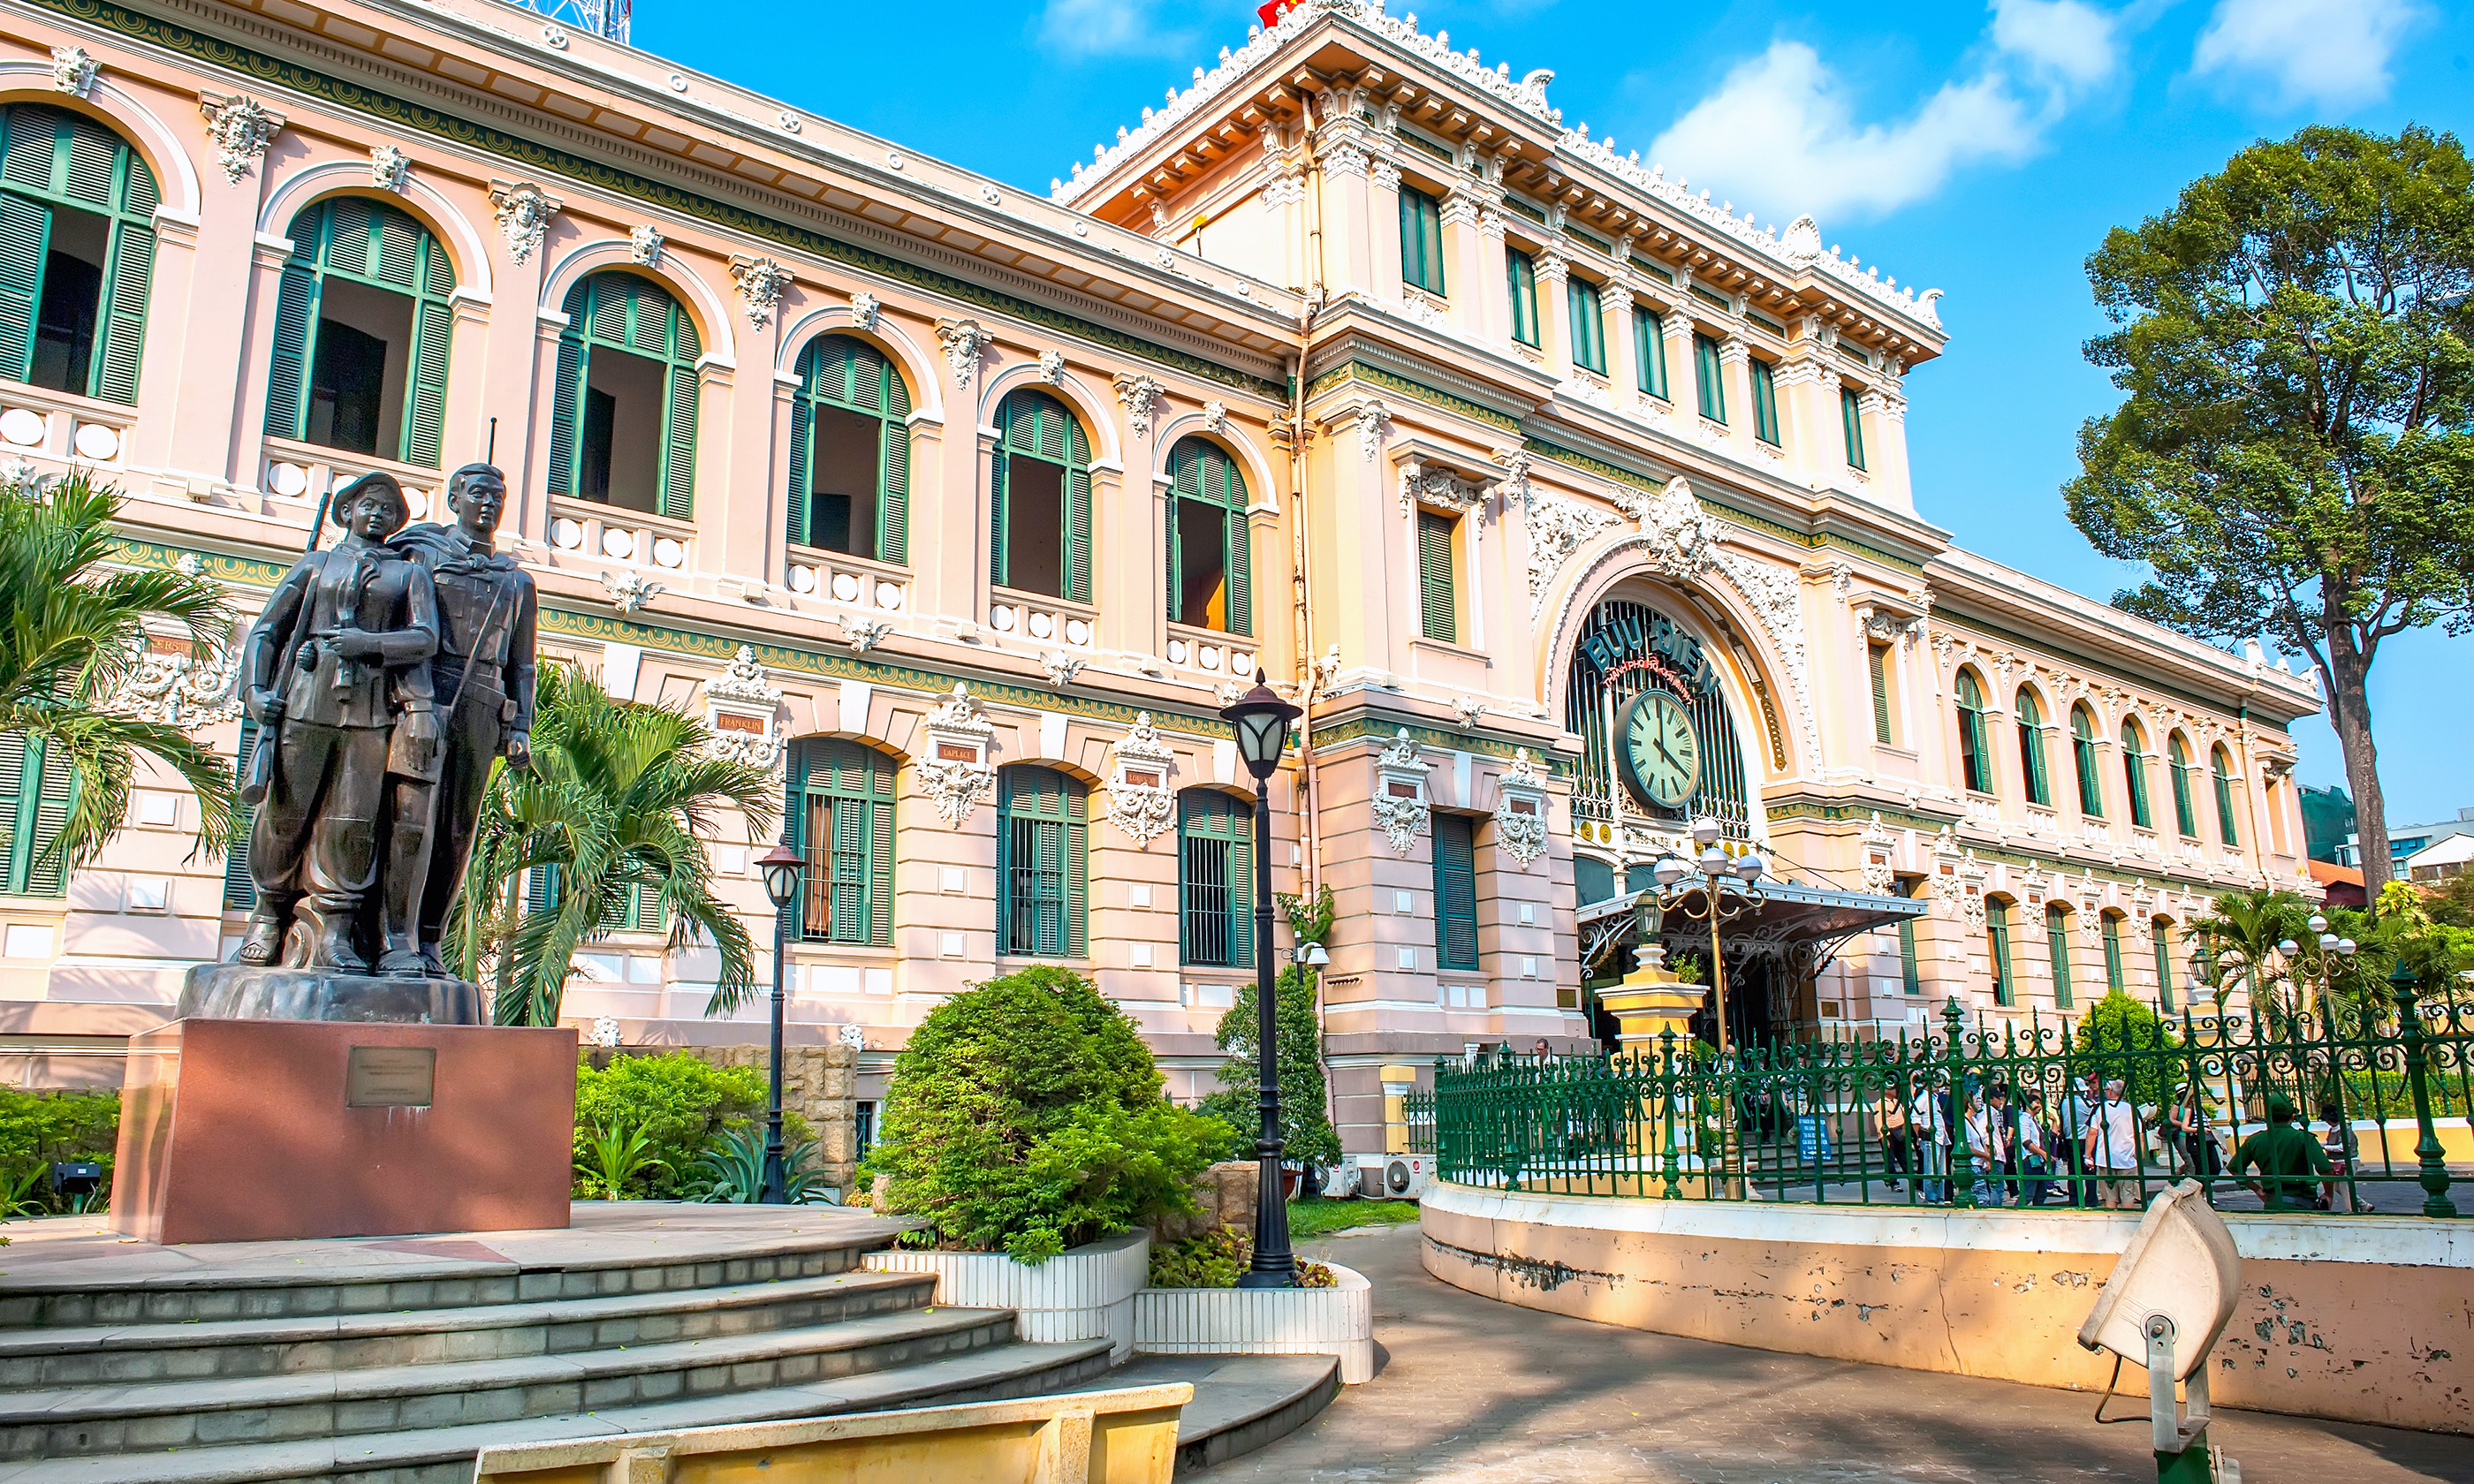 Saigon Central Post Office (Shutterstock.com. See main credit below)